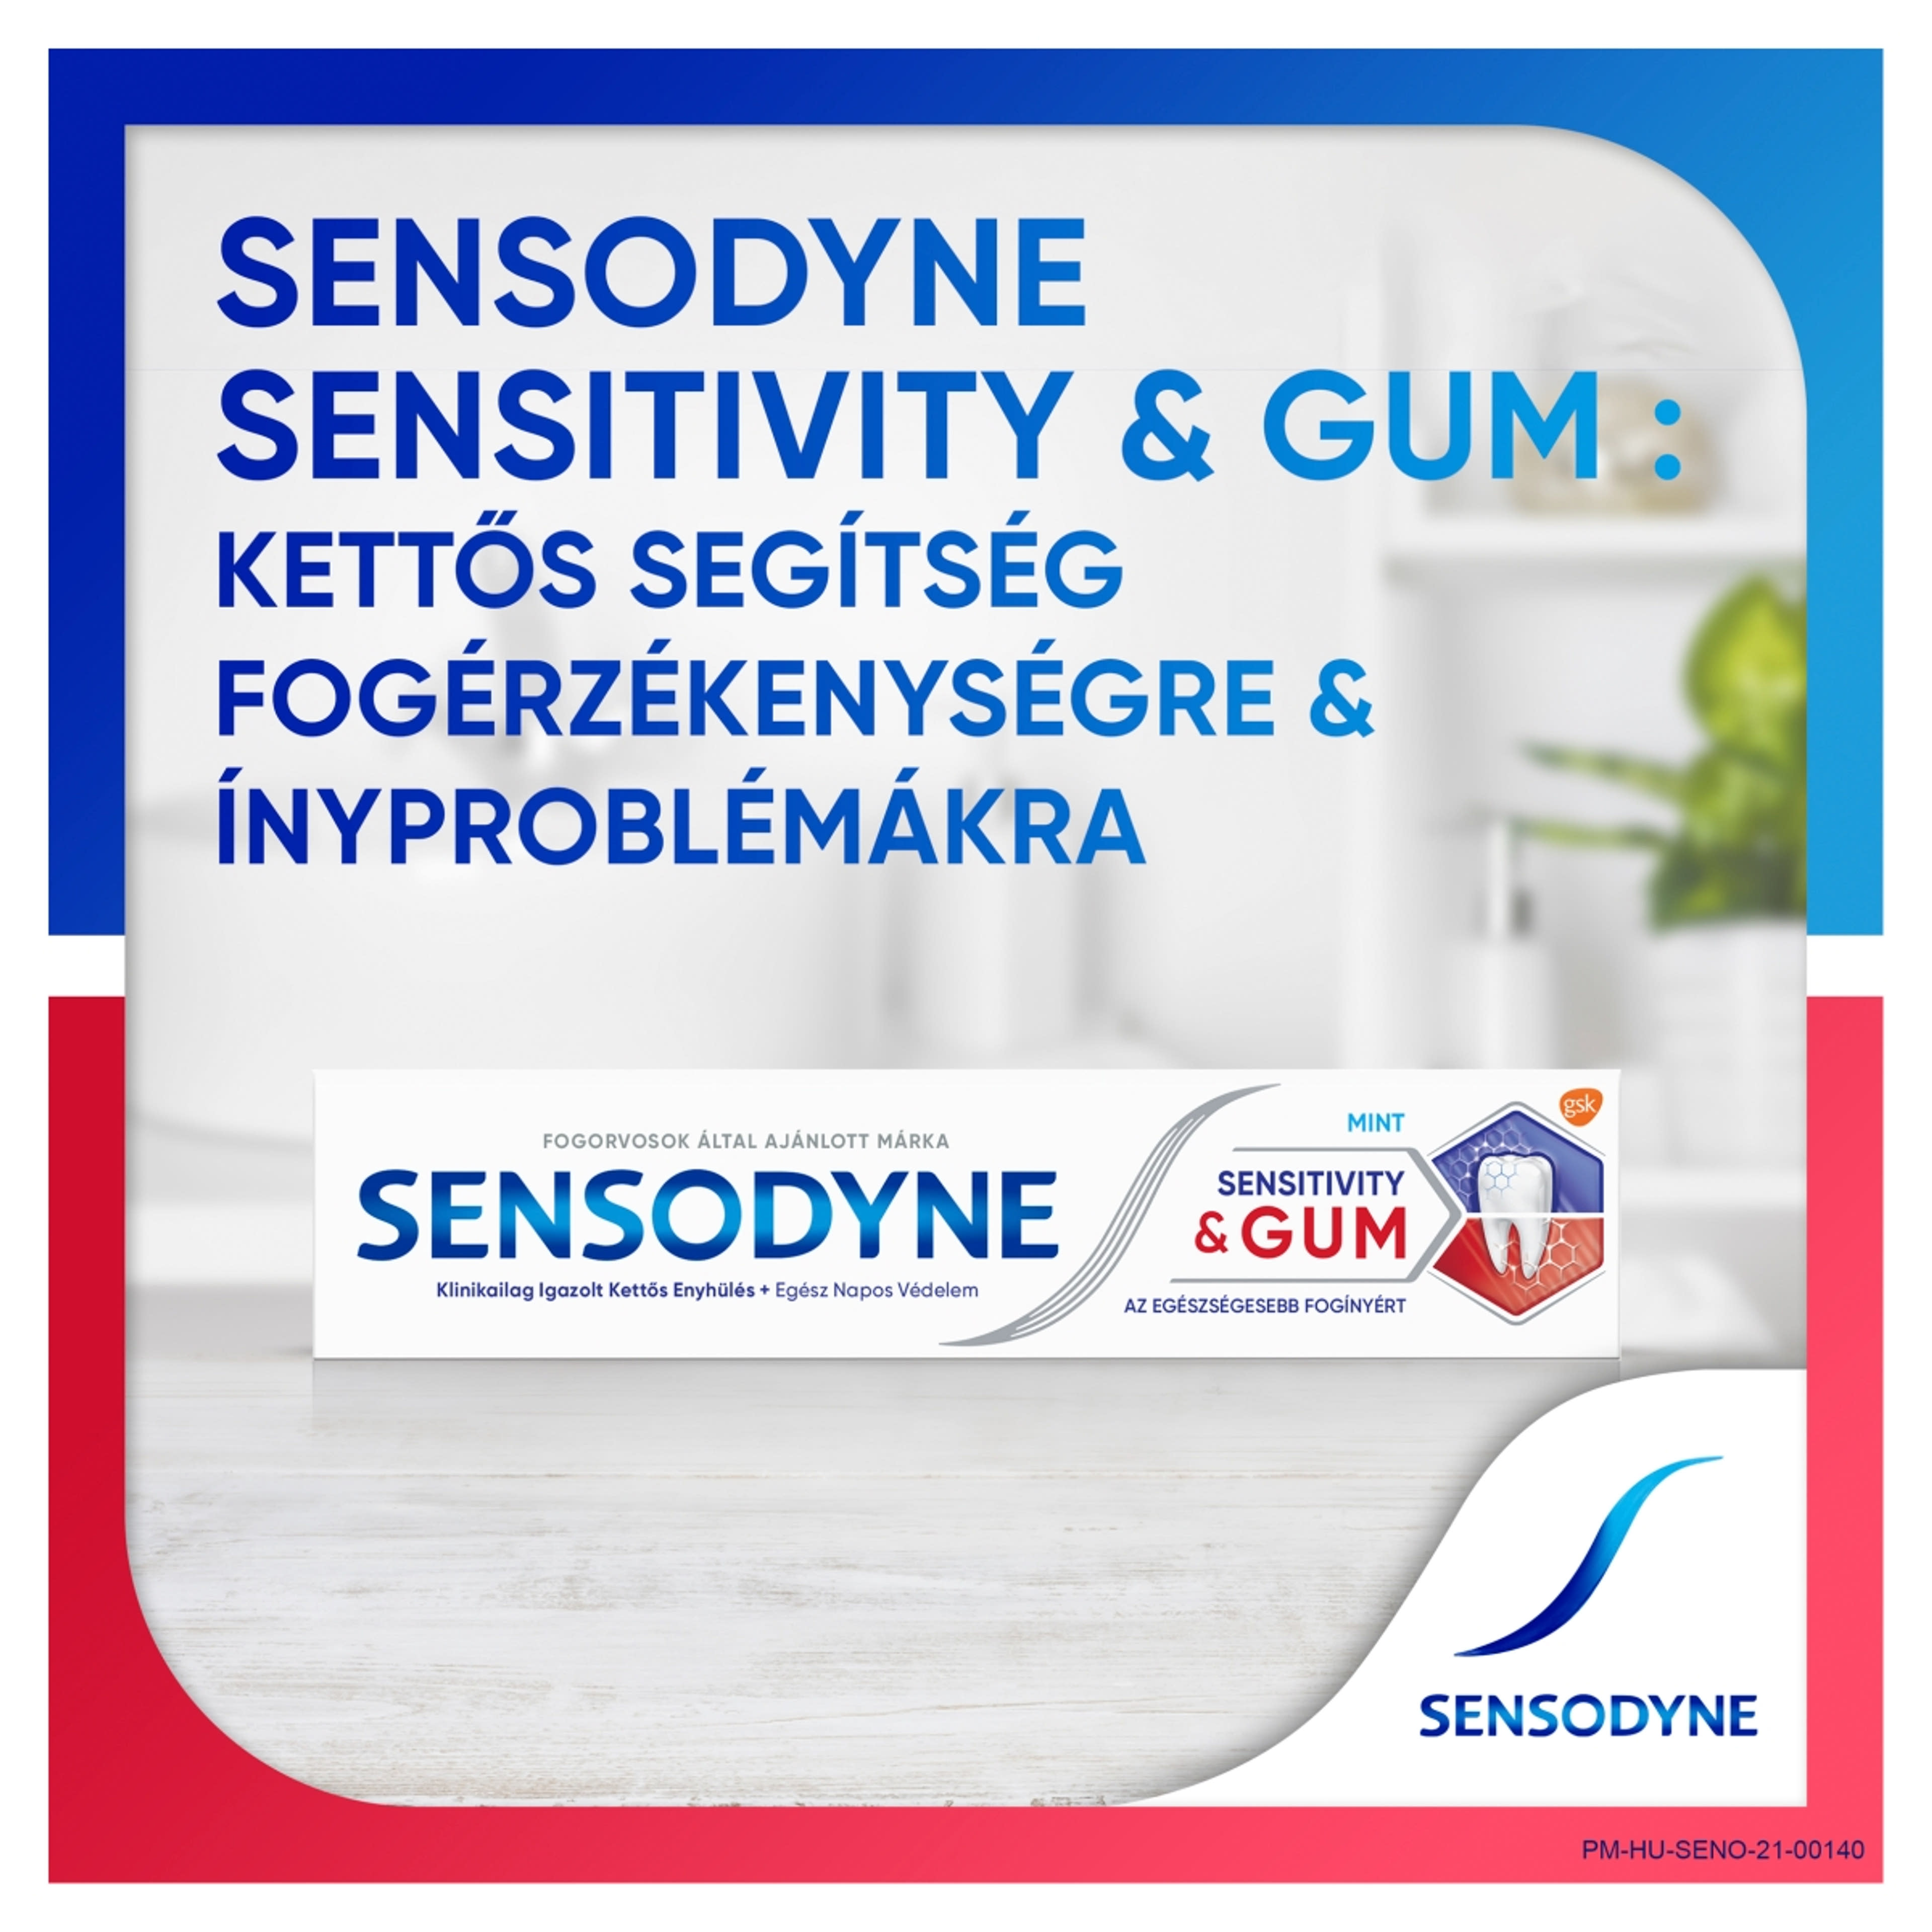 Sensodyne Sensitivity & Gum fogkrém - 75 ml-4